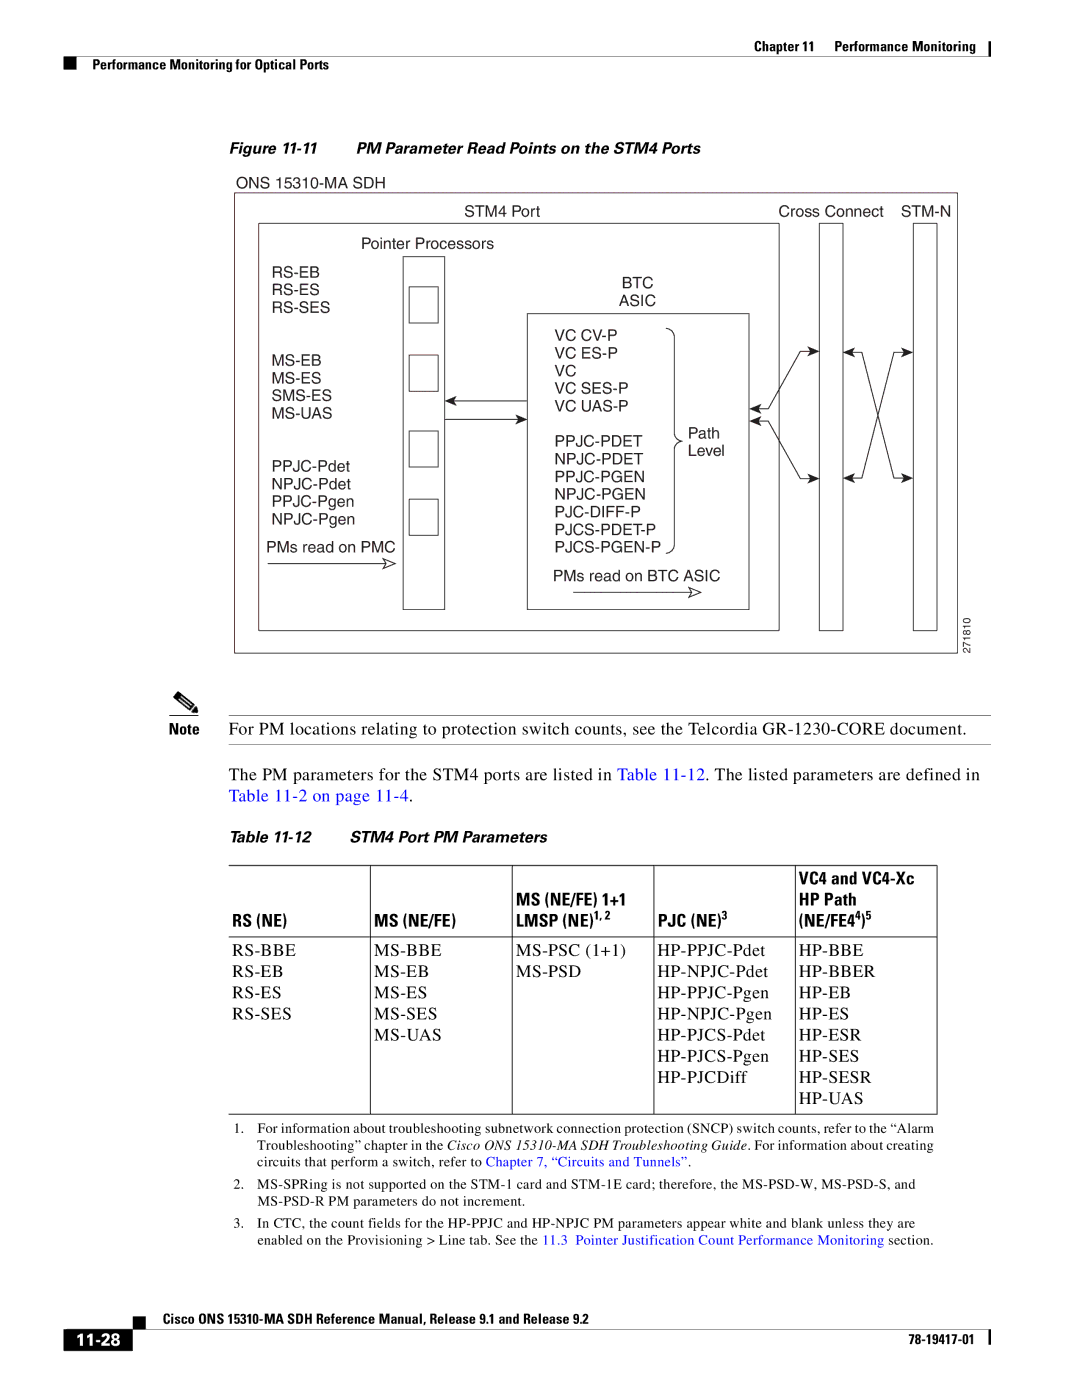 Cisco Systems 15310-MA manual VC4 and VC4-Xc, MS NE/FE 1+1 HP Path, Lmsp NE 1 PJC NE NE/FE4 4, 11-28 